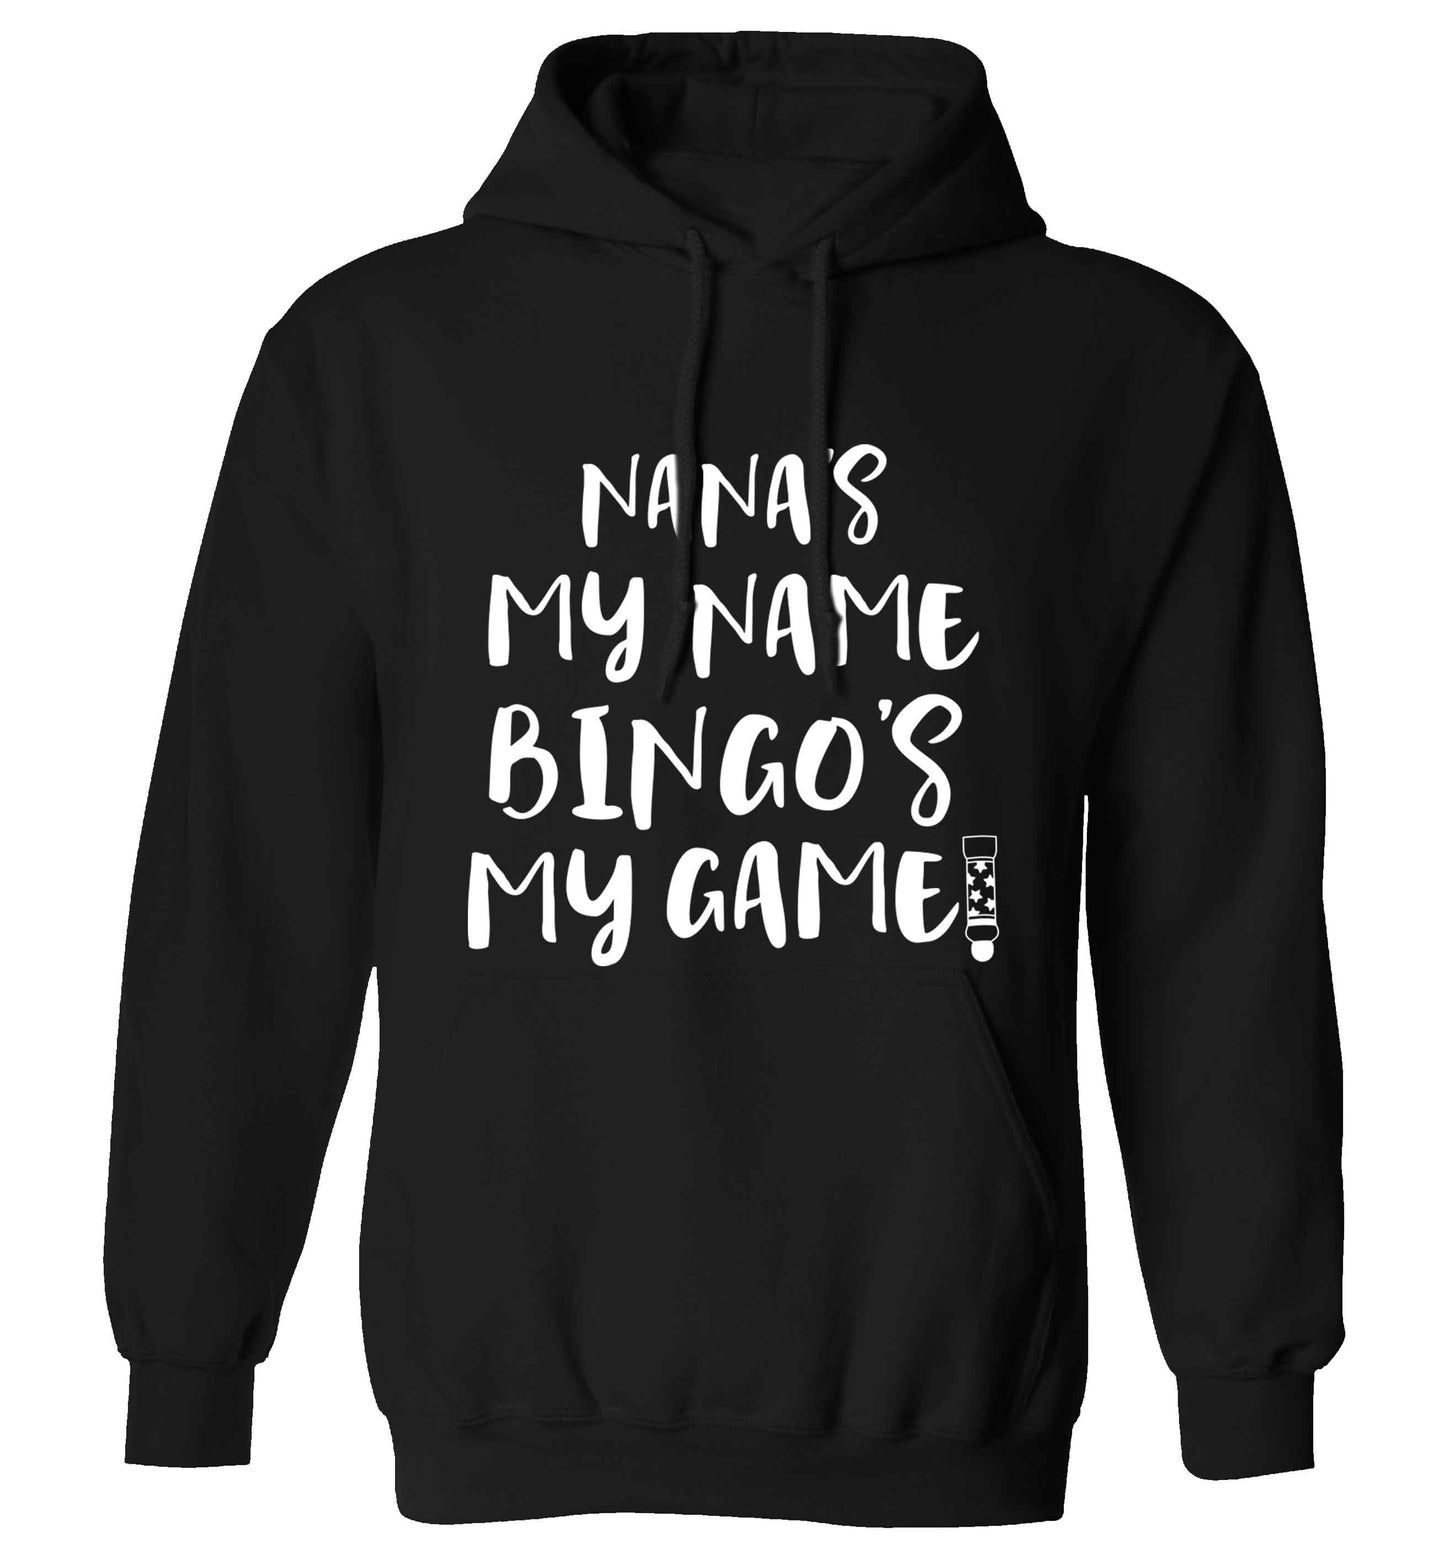 Nana's my name bingo's my game! adults unisex black hoodie 2XL